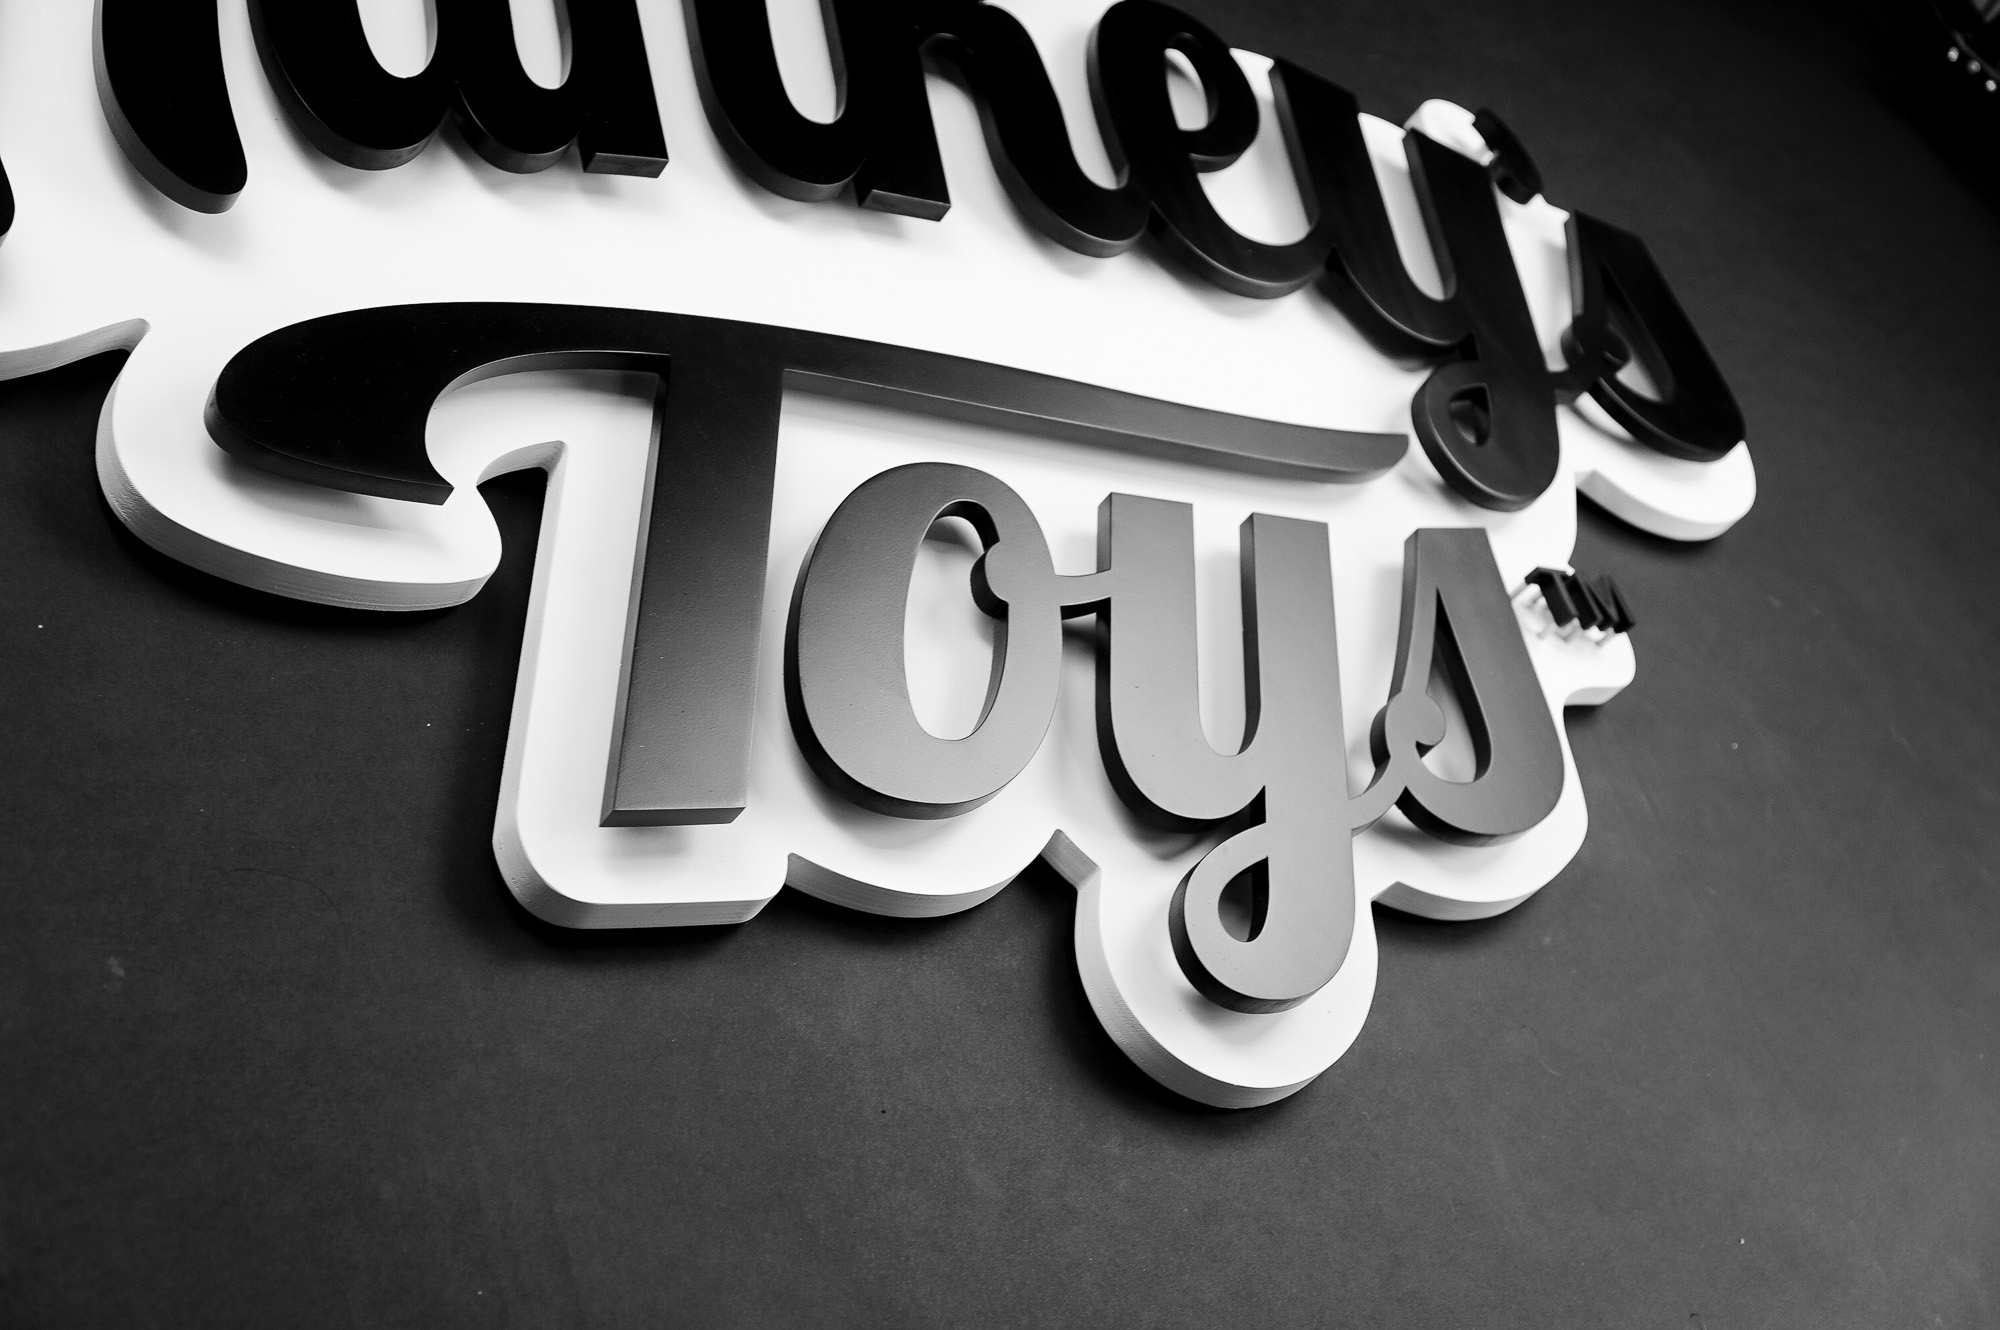 Black and white raised cutout script logo for Mr. Hankey's Toys, maker of handmade adult sex toys.